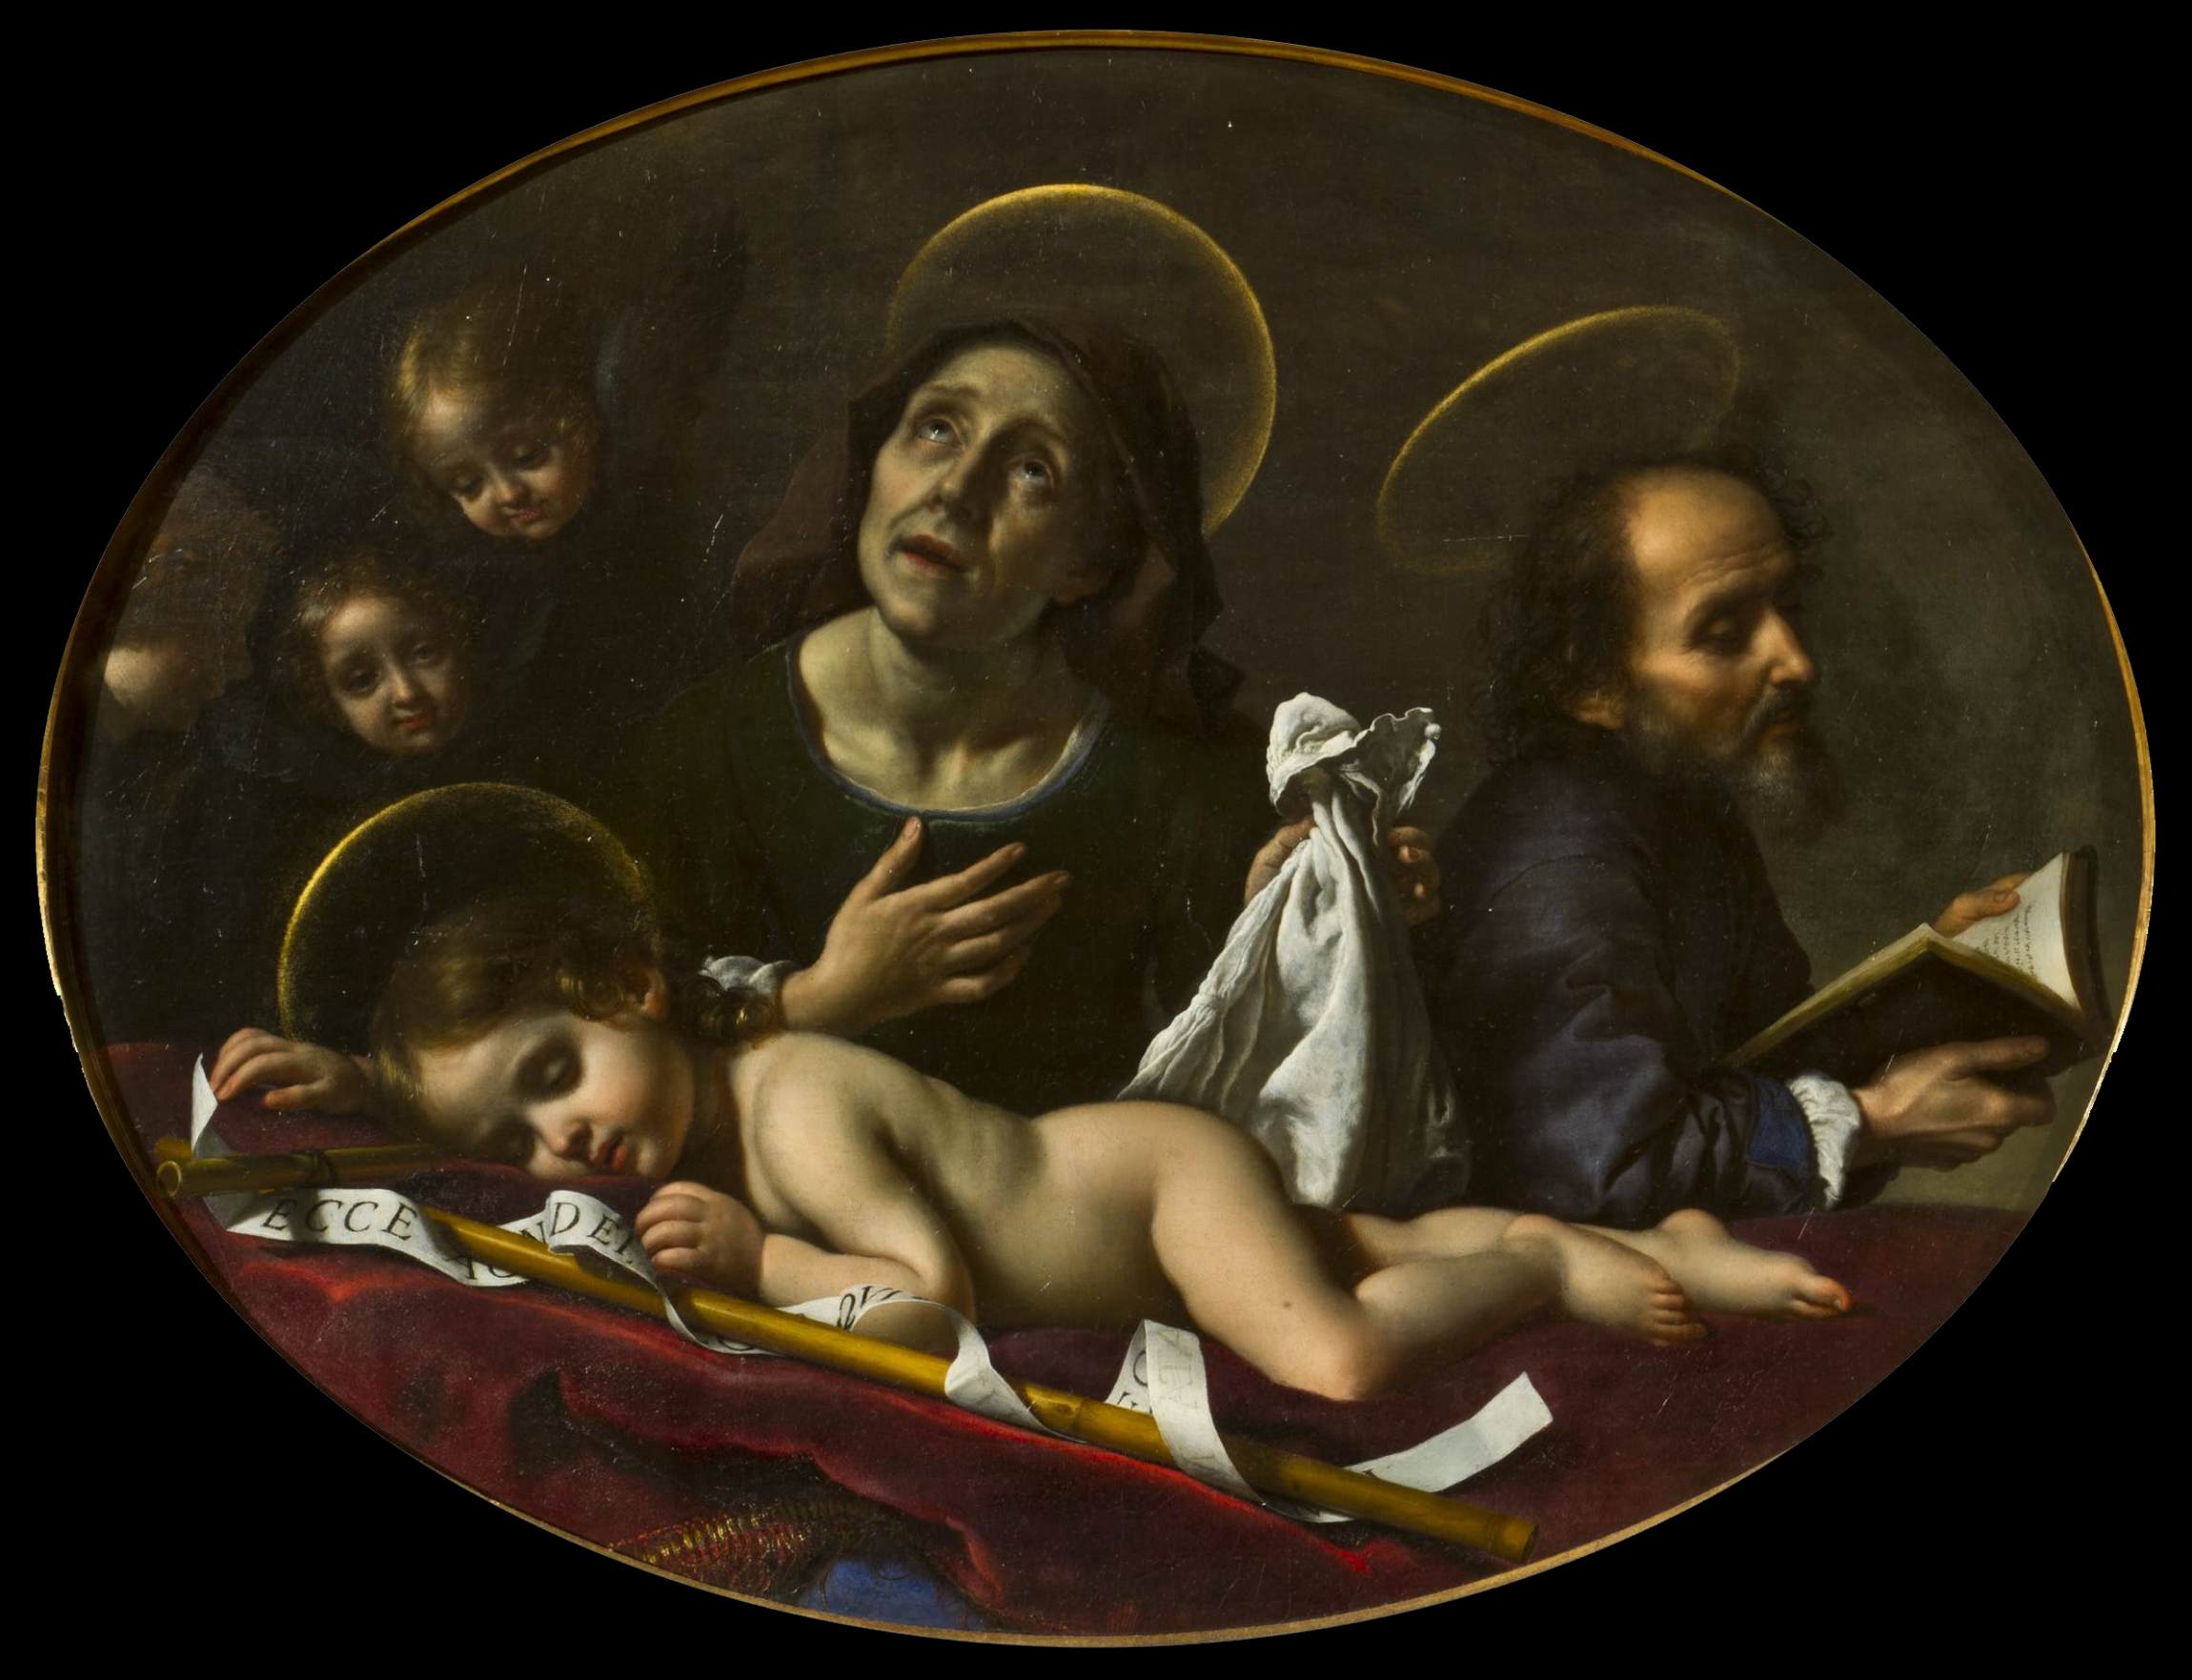 The Sleeping Infant Saint John